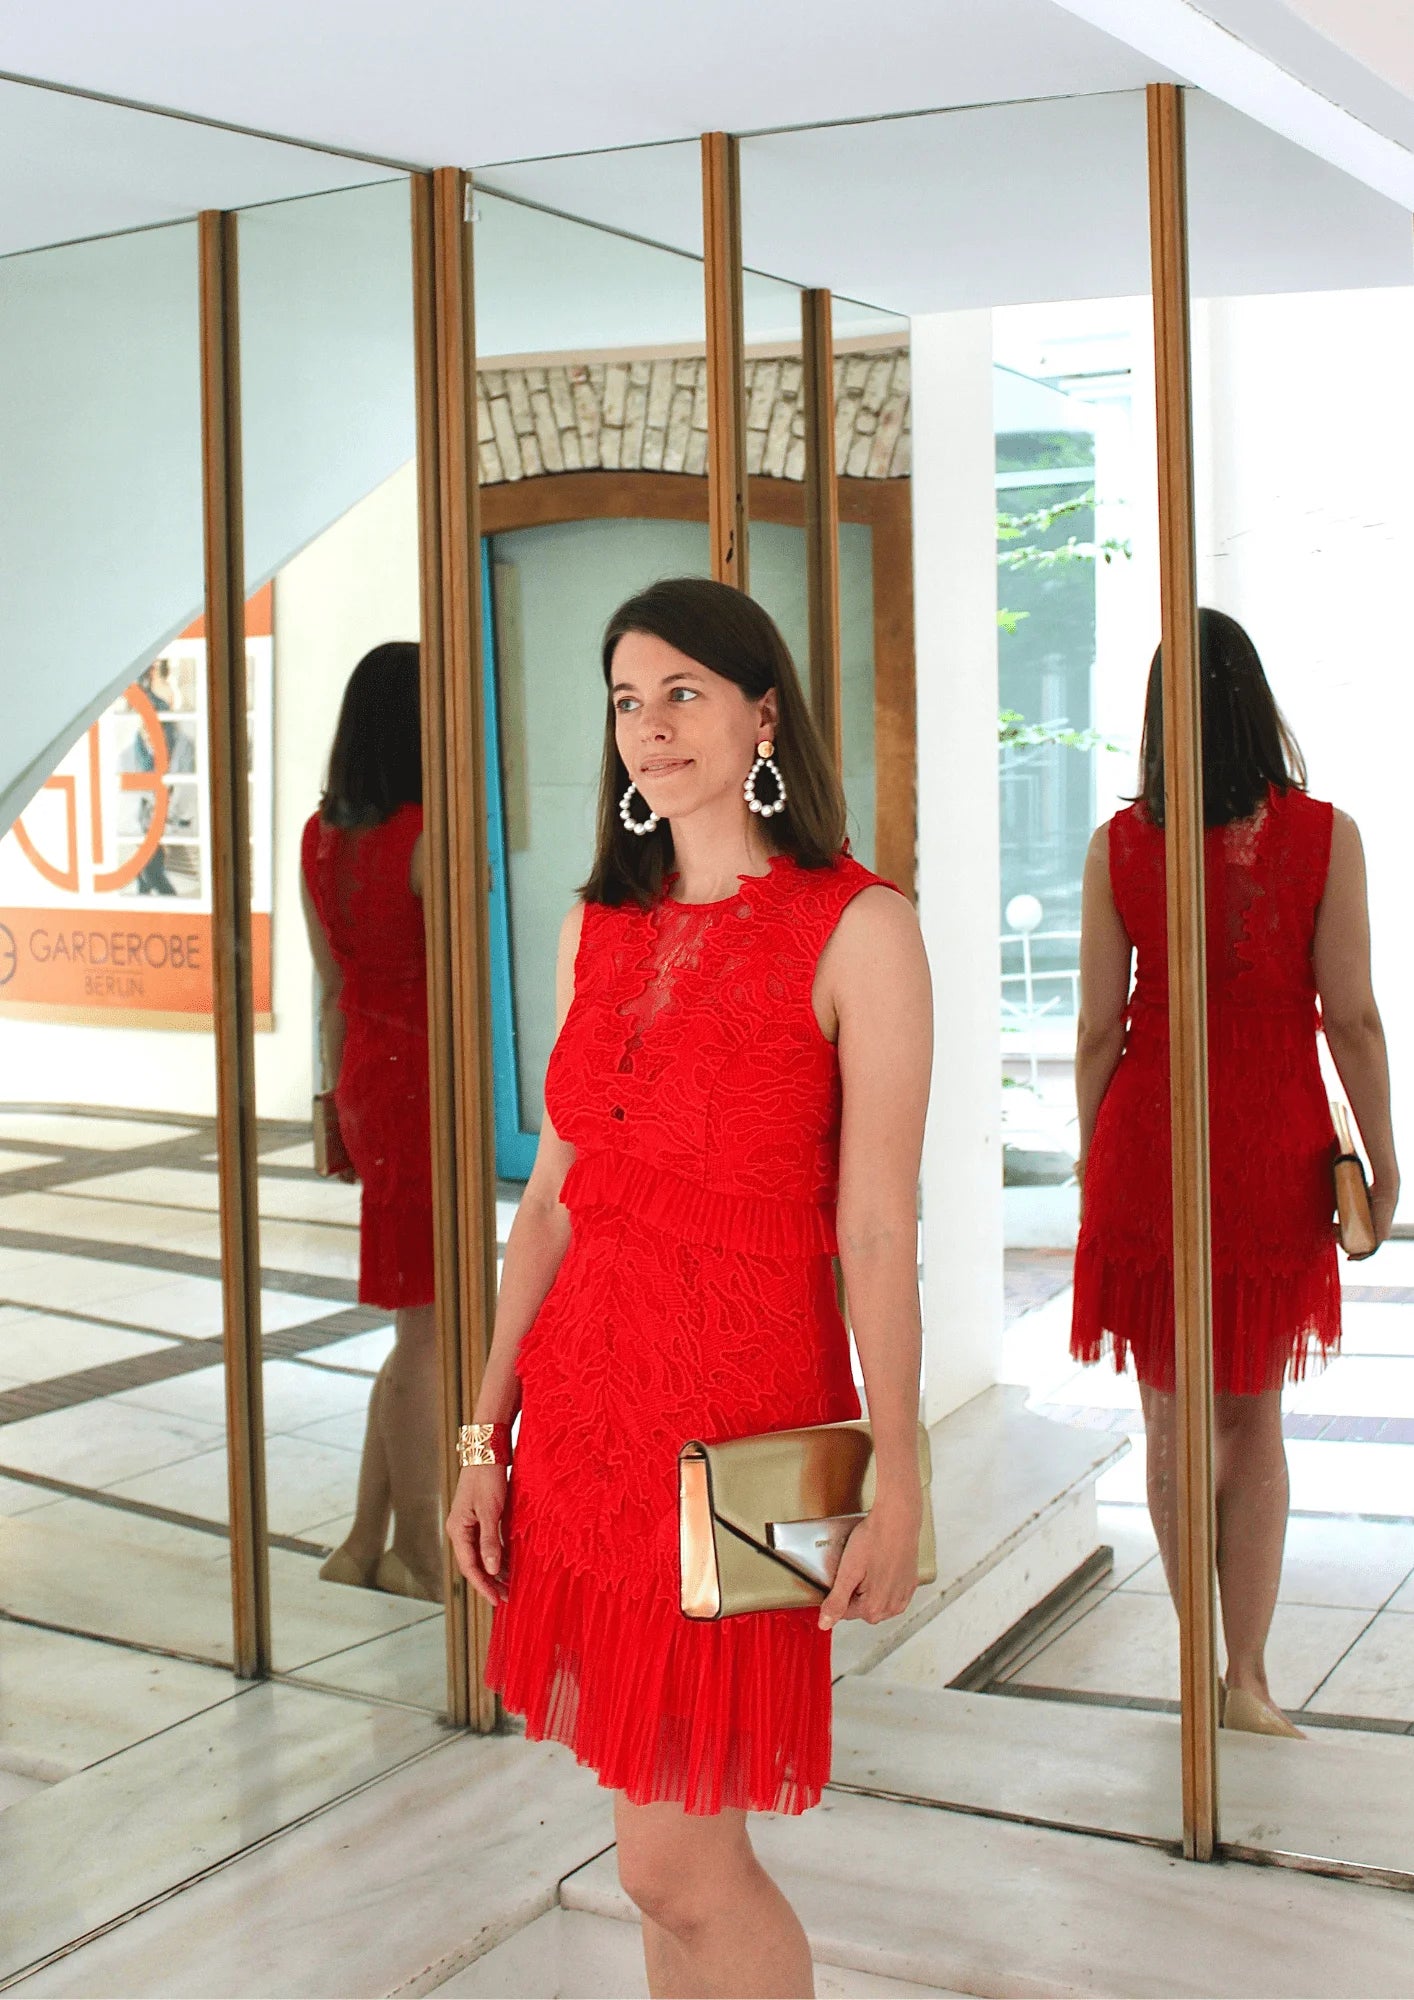 Rotes Kleid Francesca